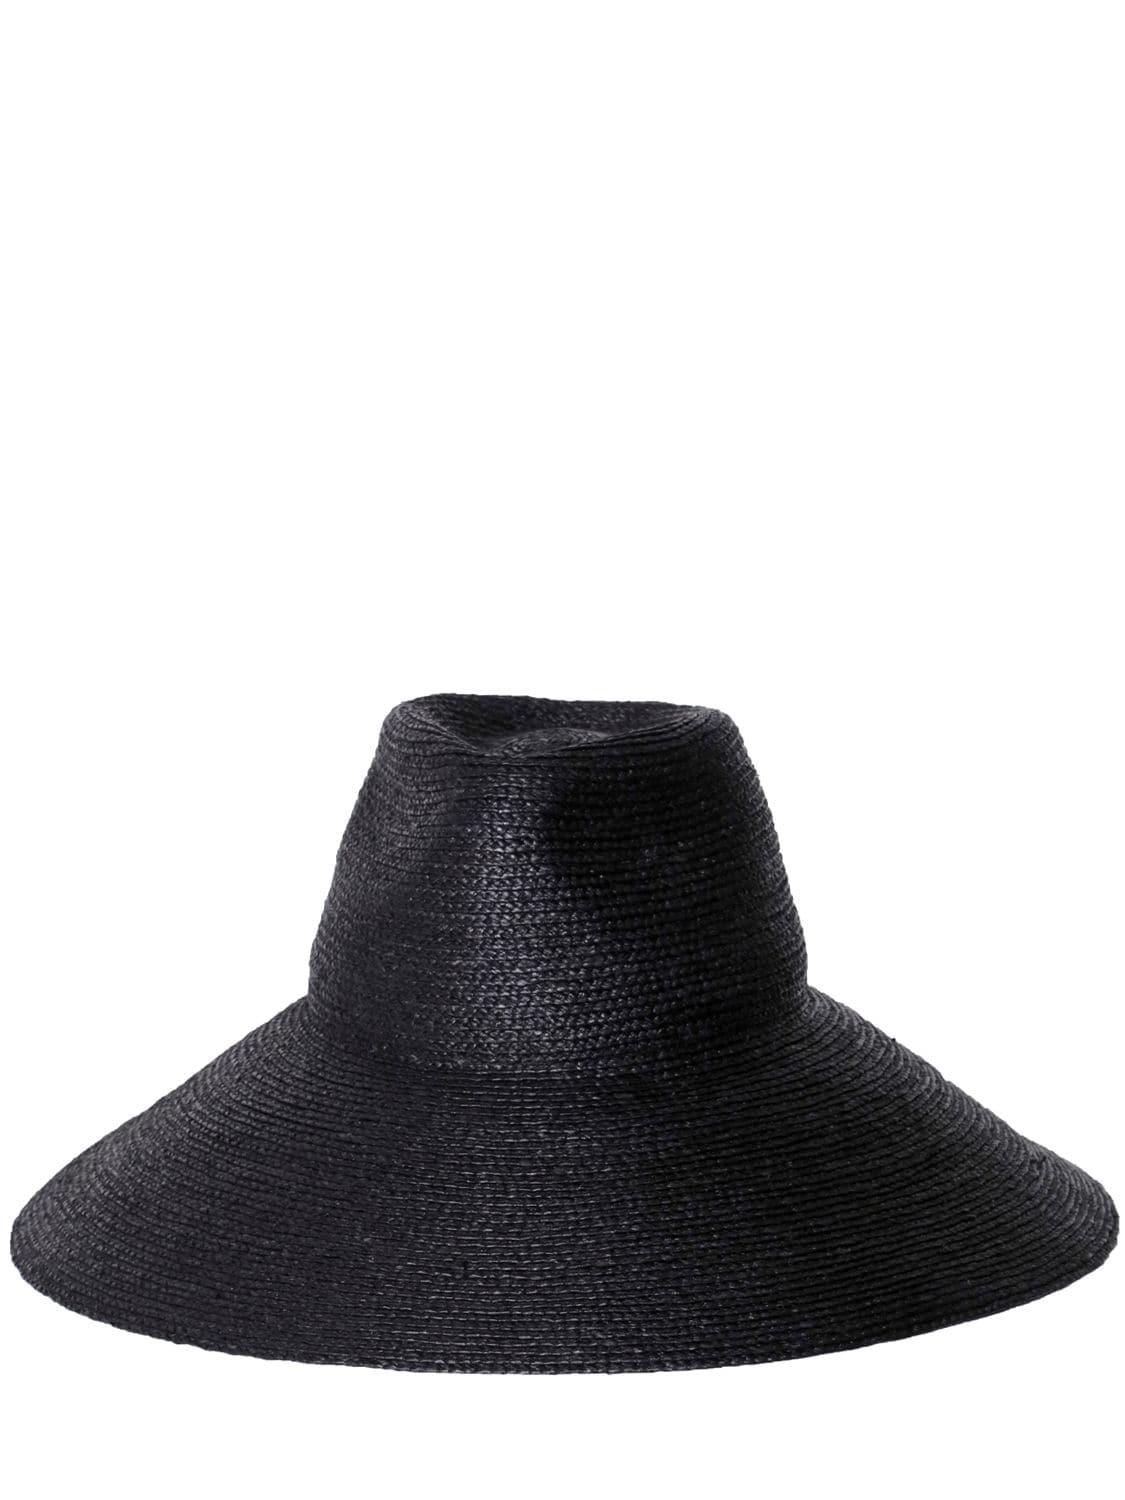 Image of Tinsley Raffia Straw Hat